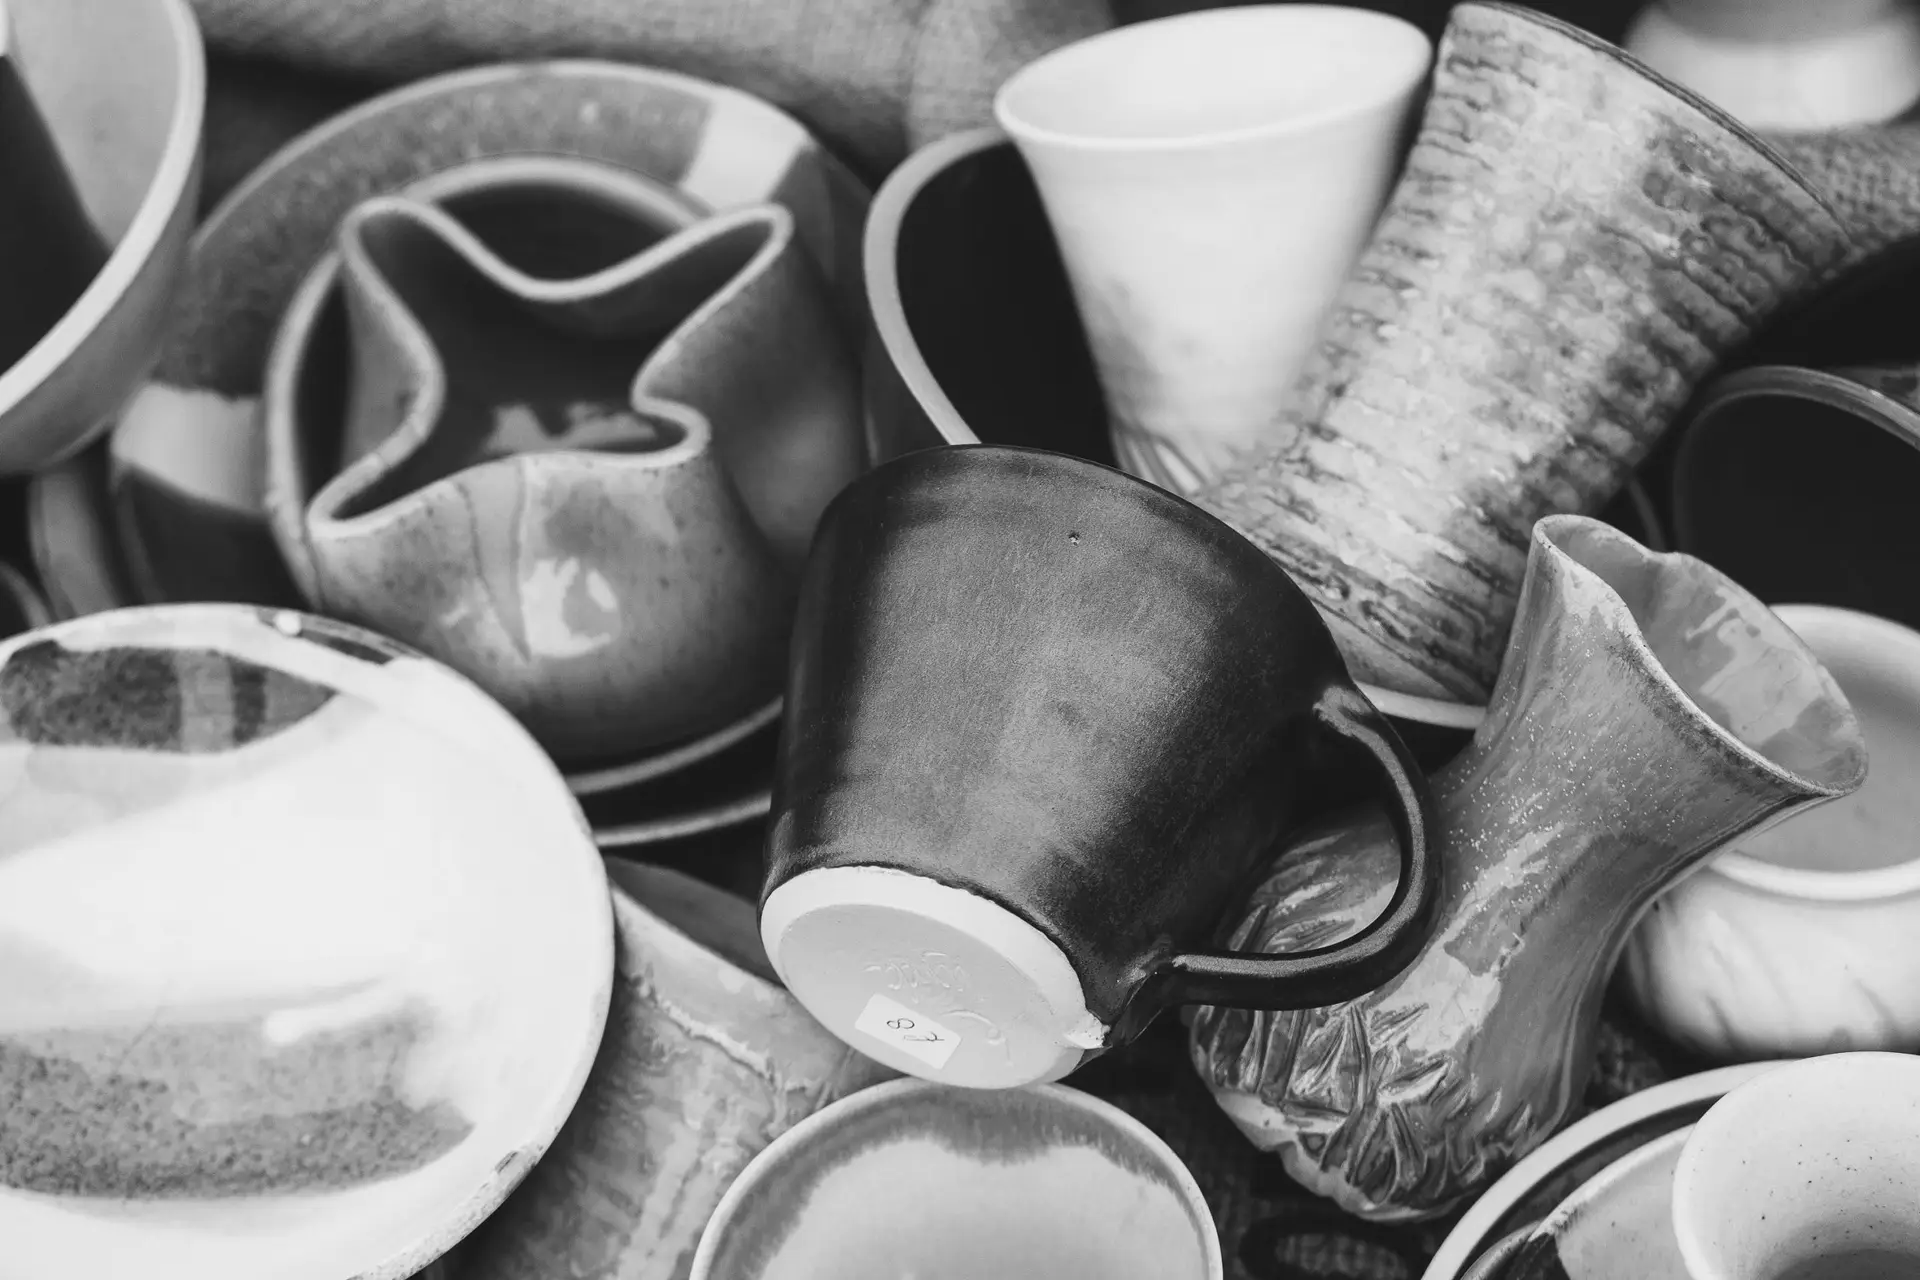 milleguld genbrug – keramik